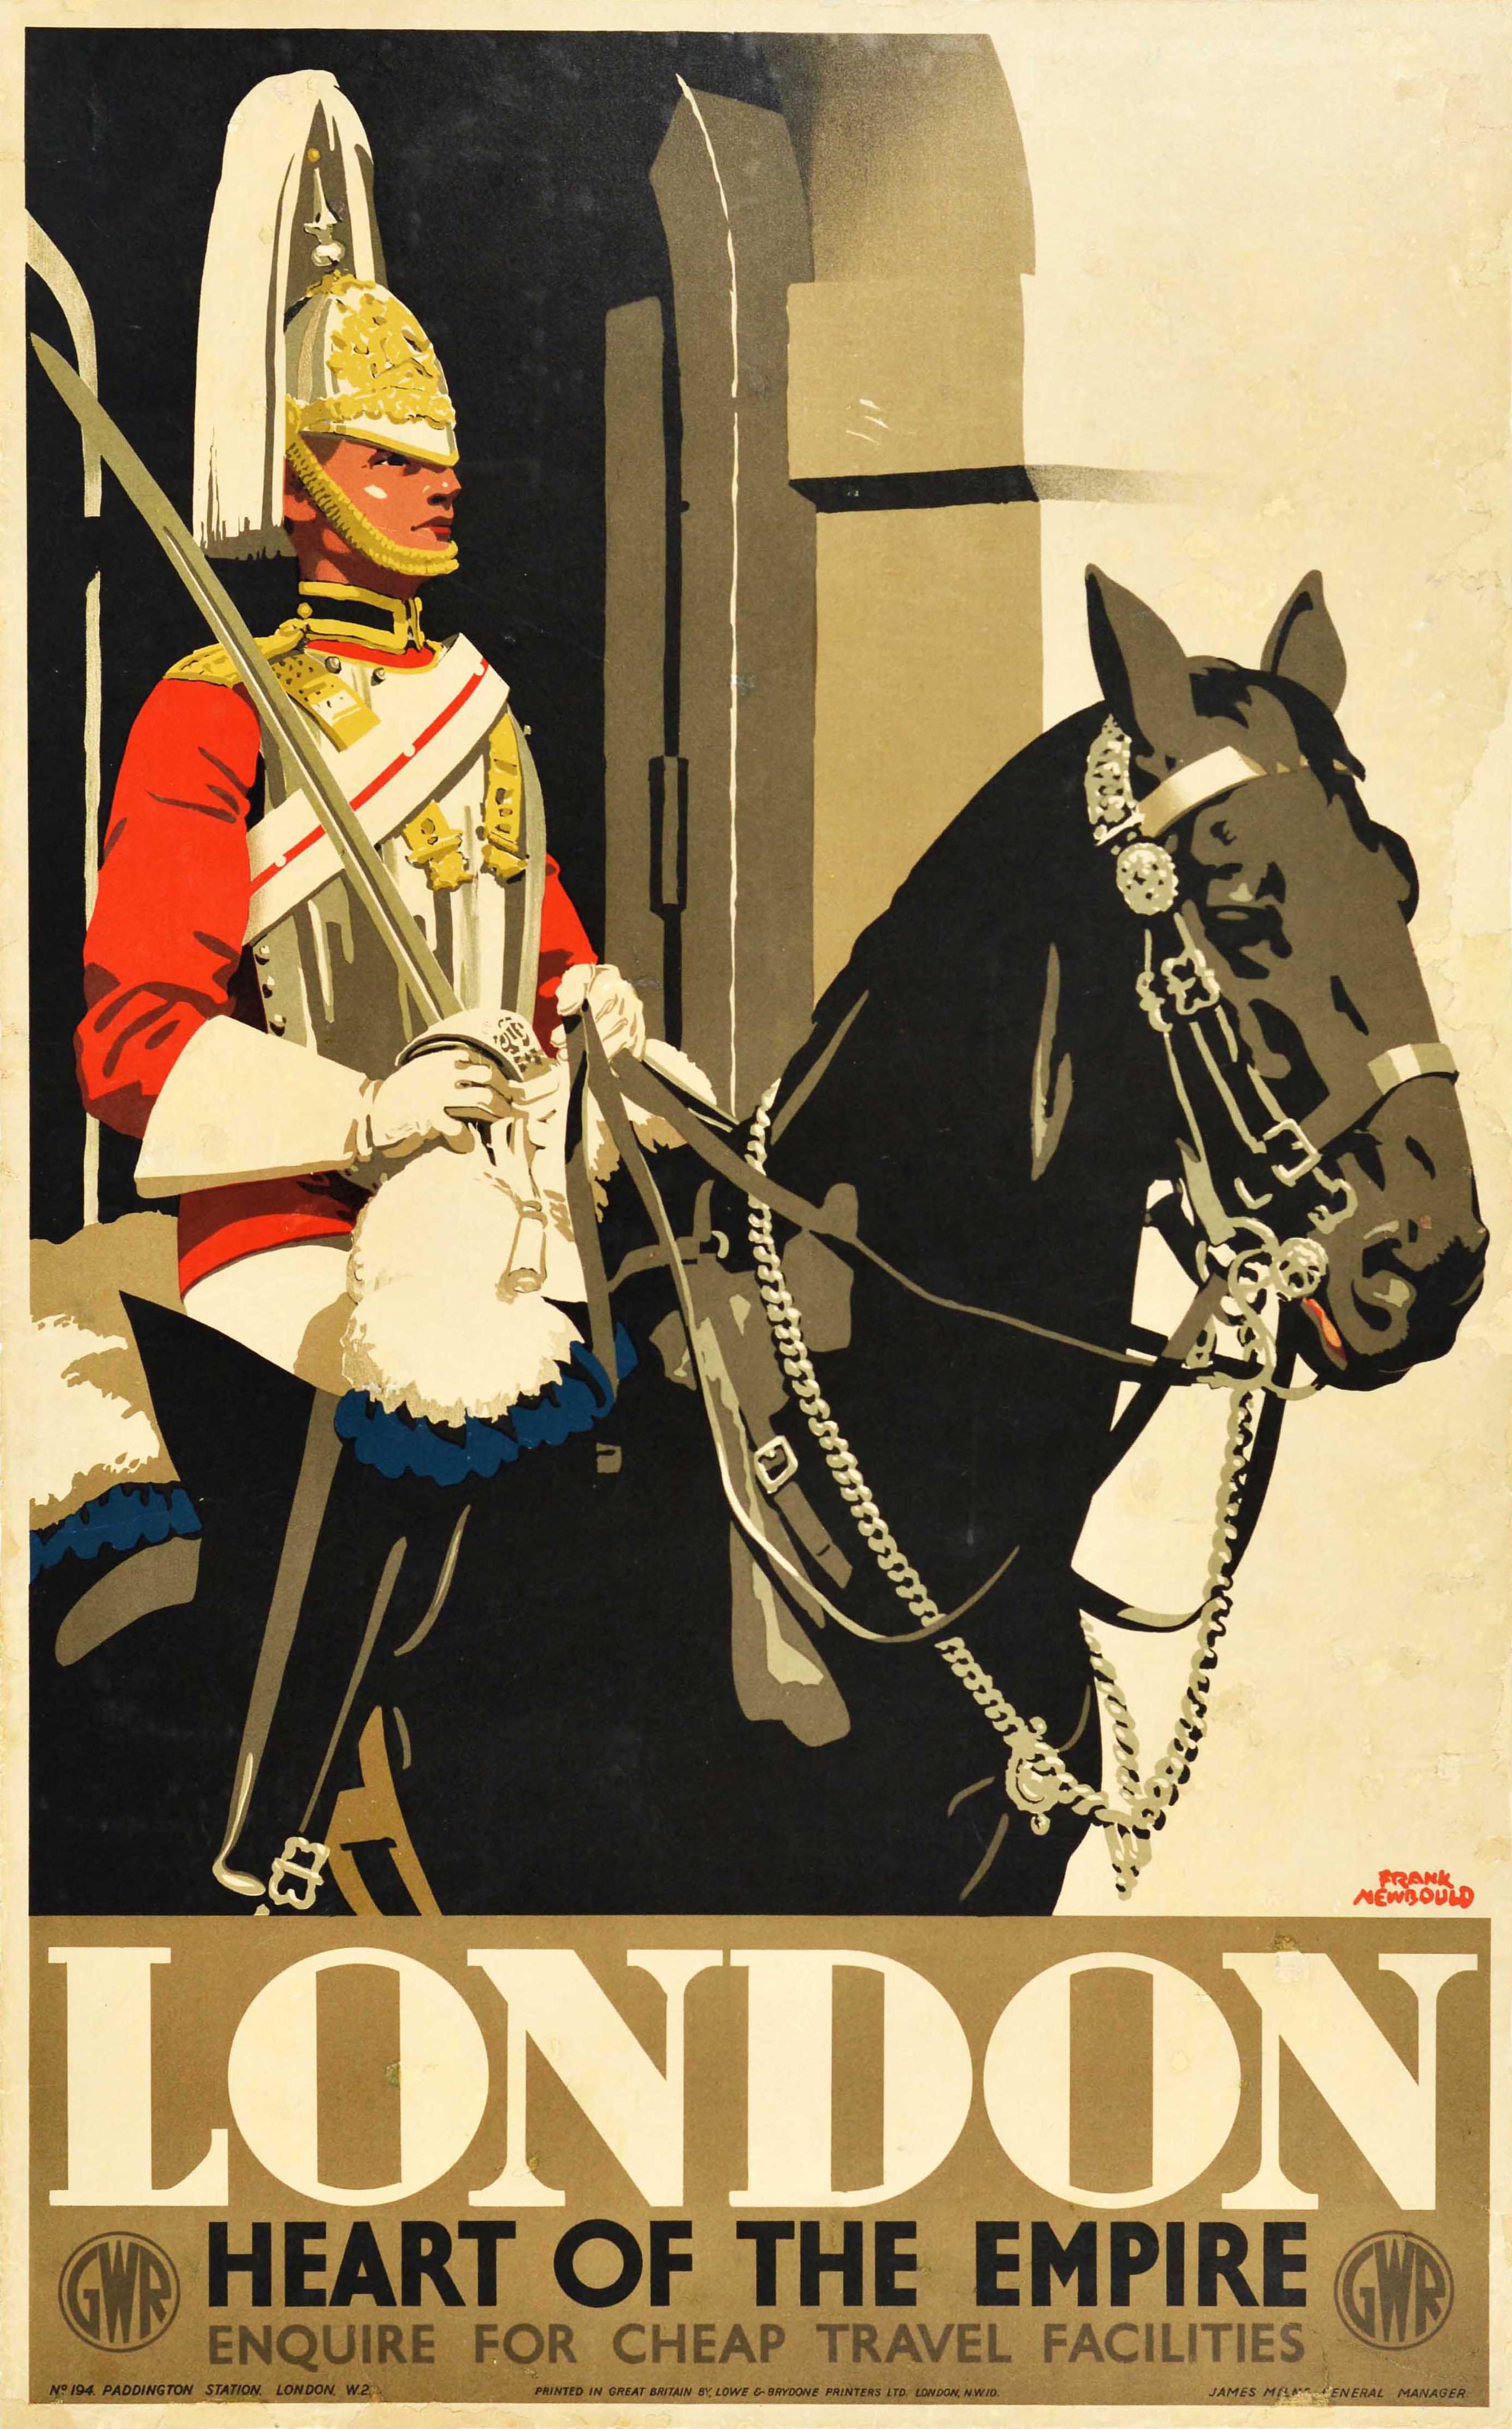 Frank Newbould Print - Original Vintage Rail Travel Poster London Heart Of The Empire GWR Horse Guard